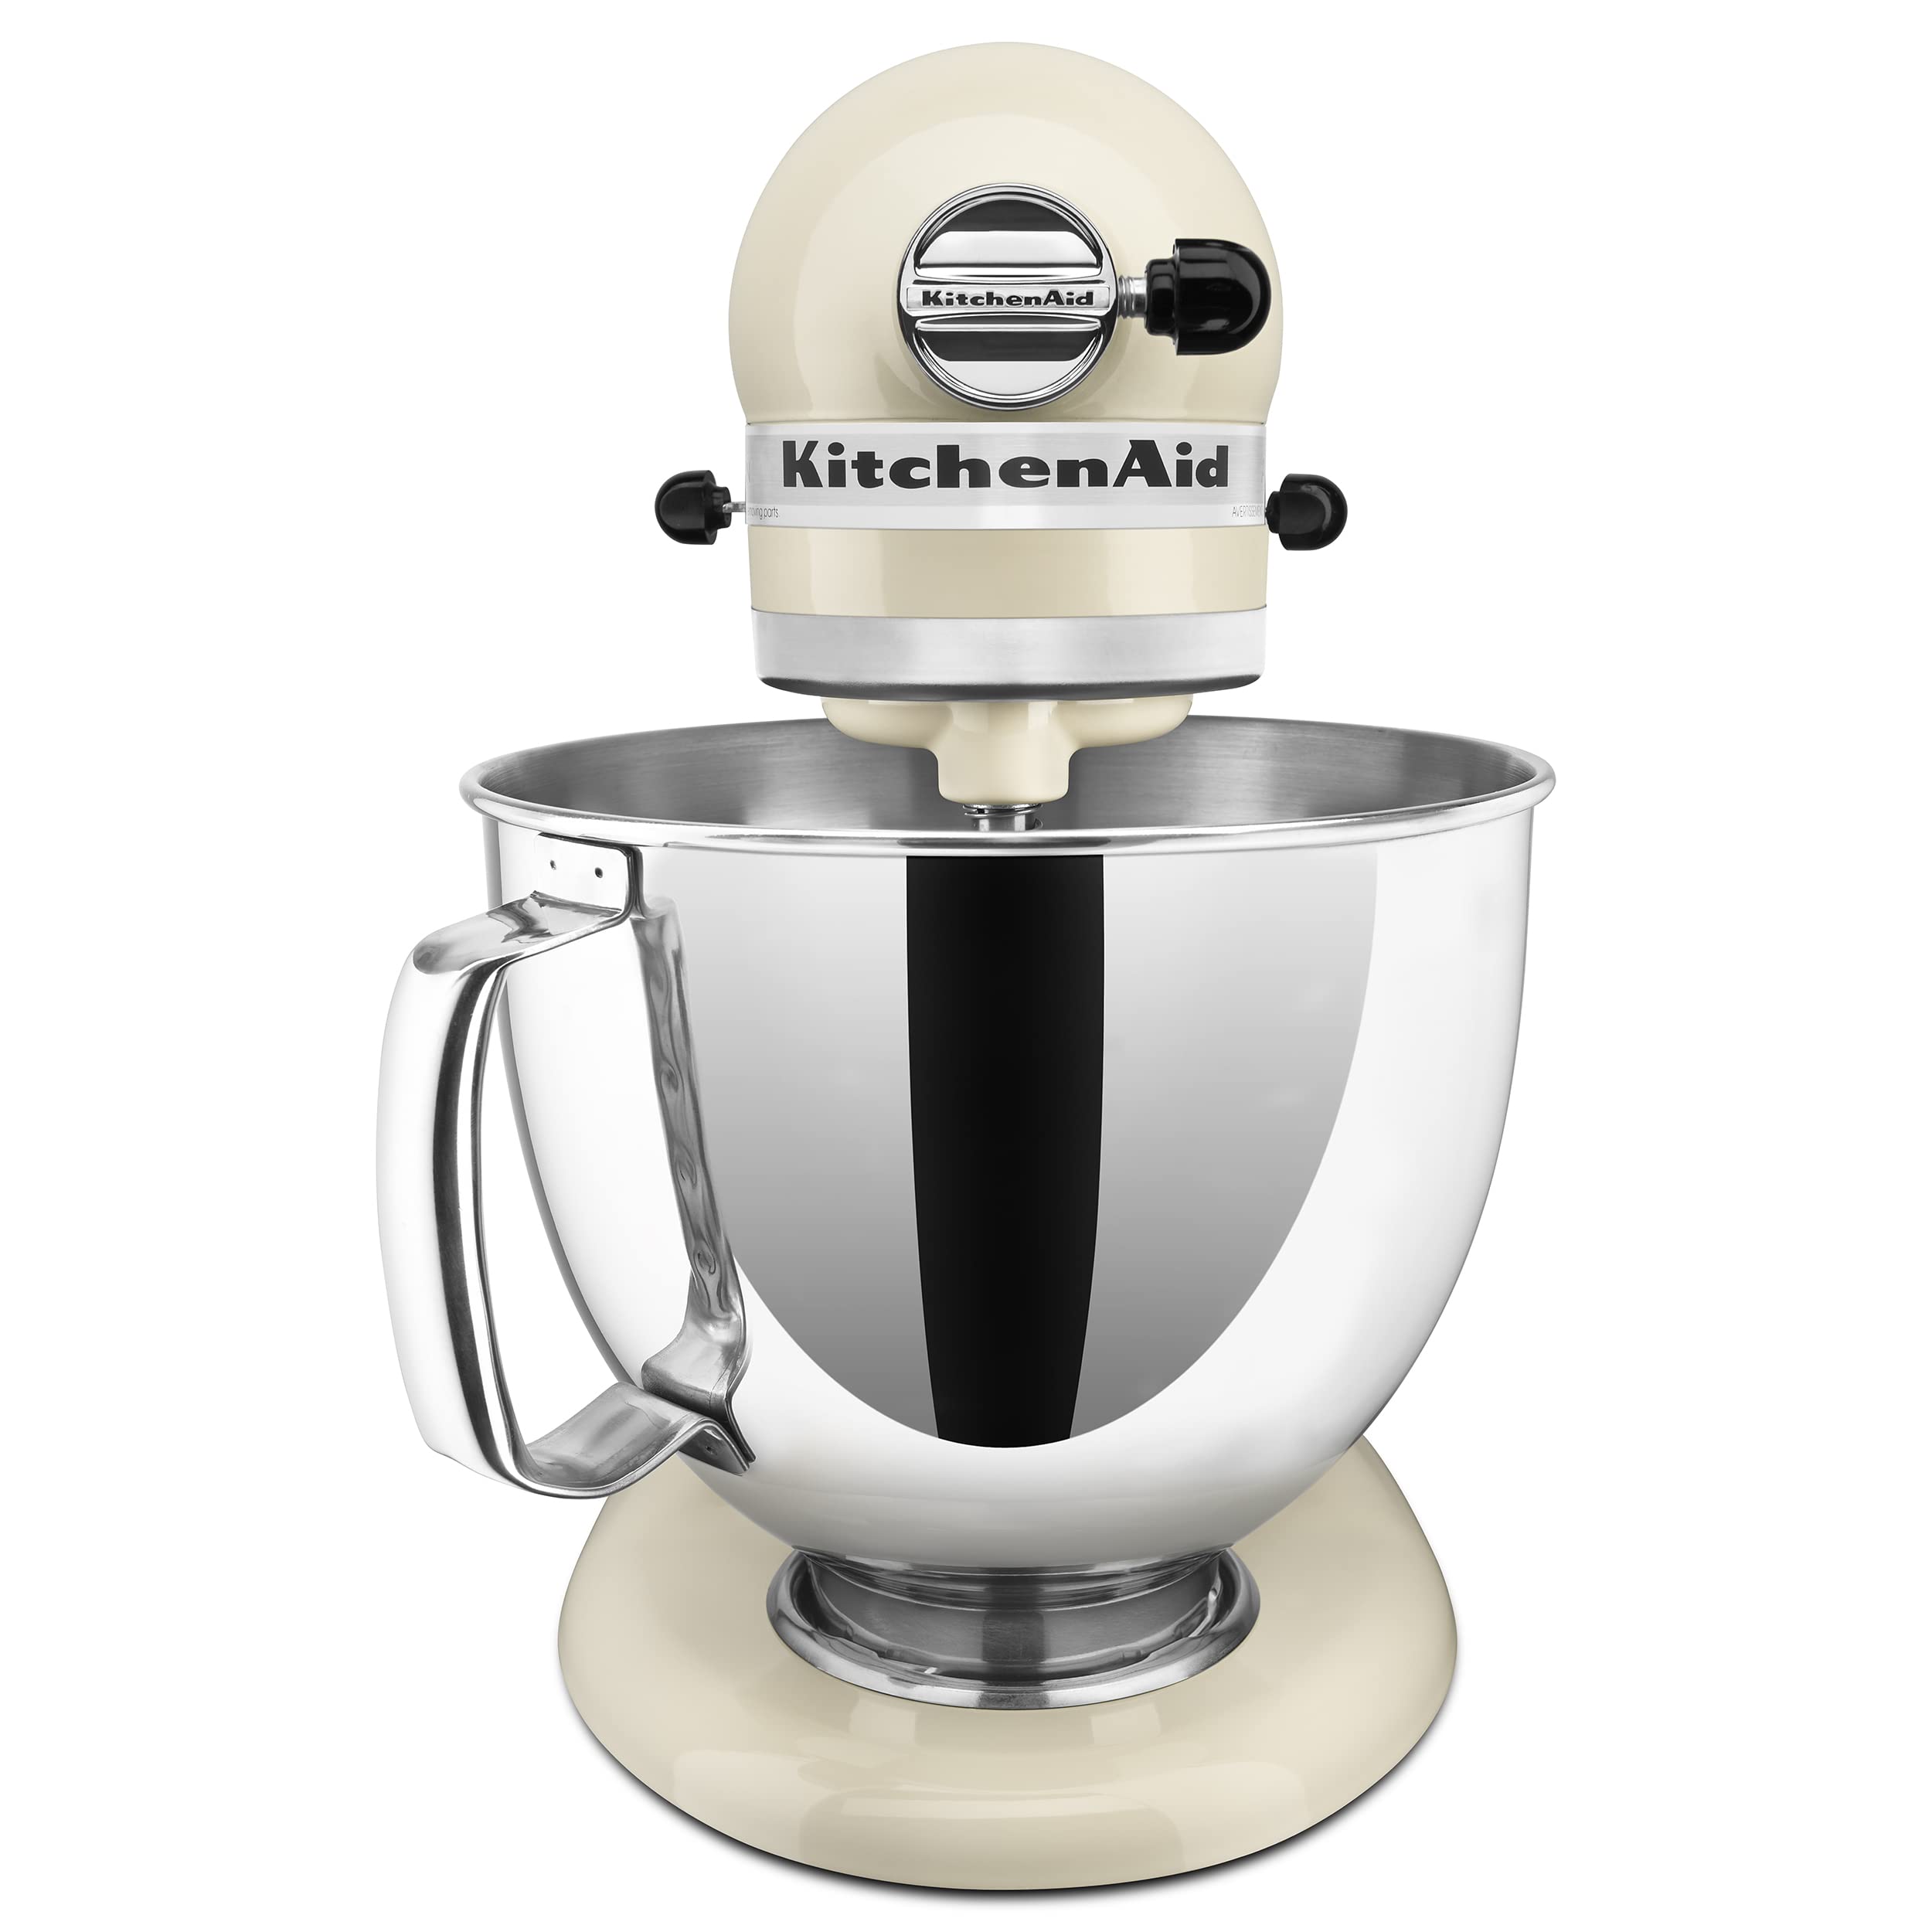 KitchenAid Artisan Series 5 Quart Tilt Head Stand Mixer with Pouring Shield KSM150PS, Almond Cream